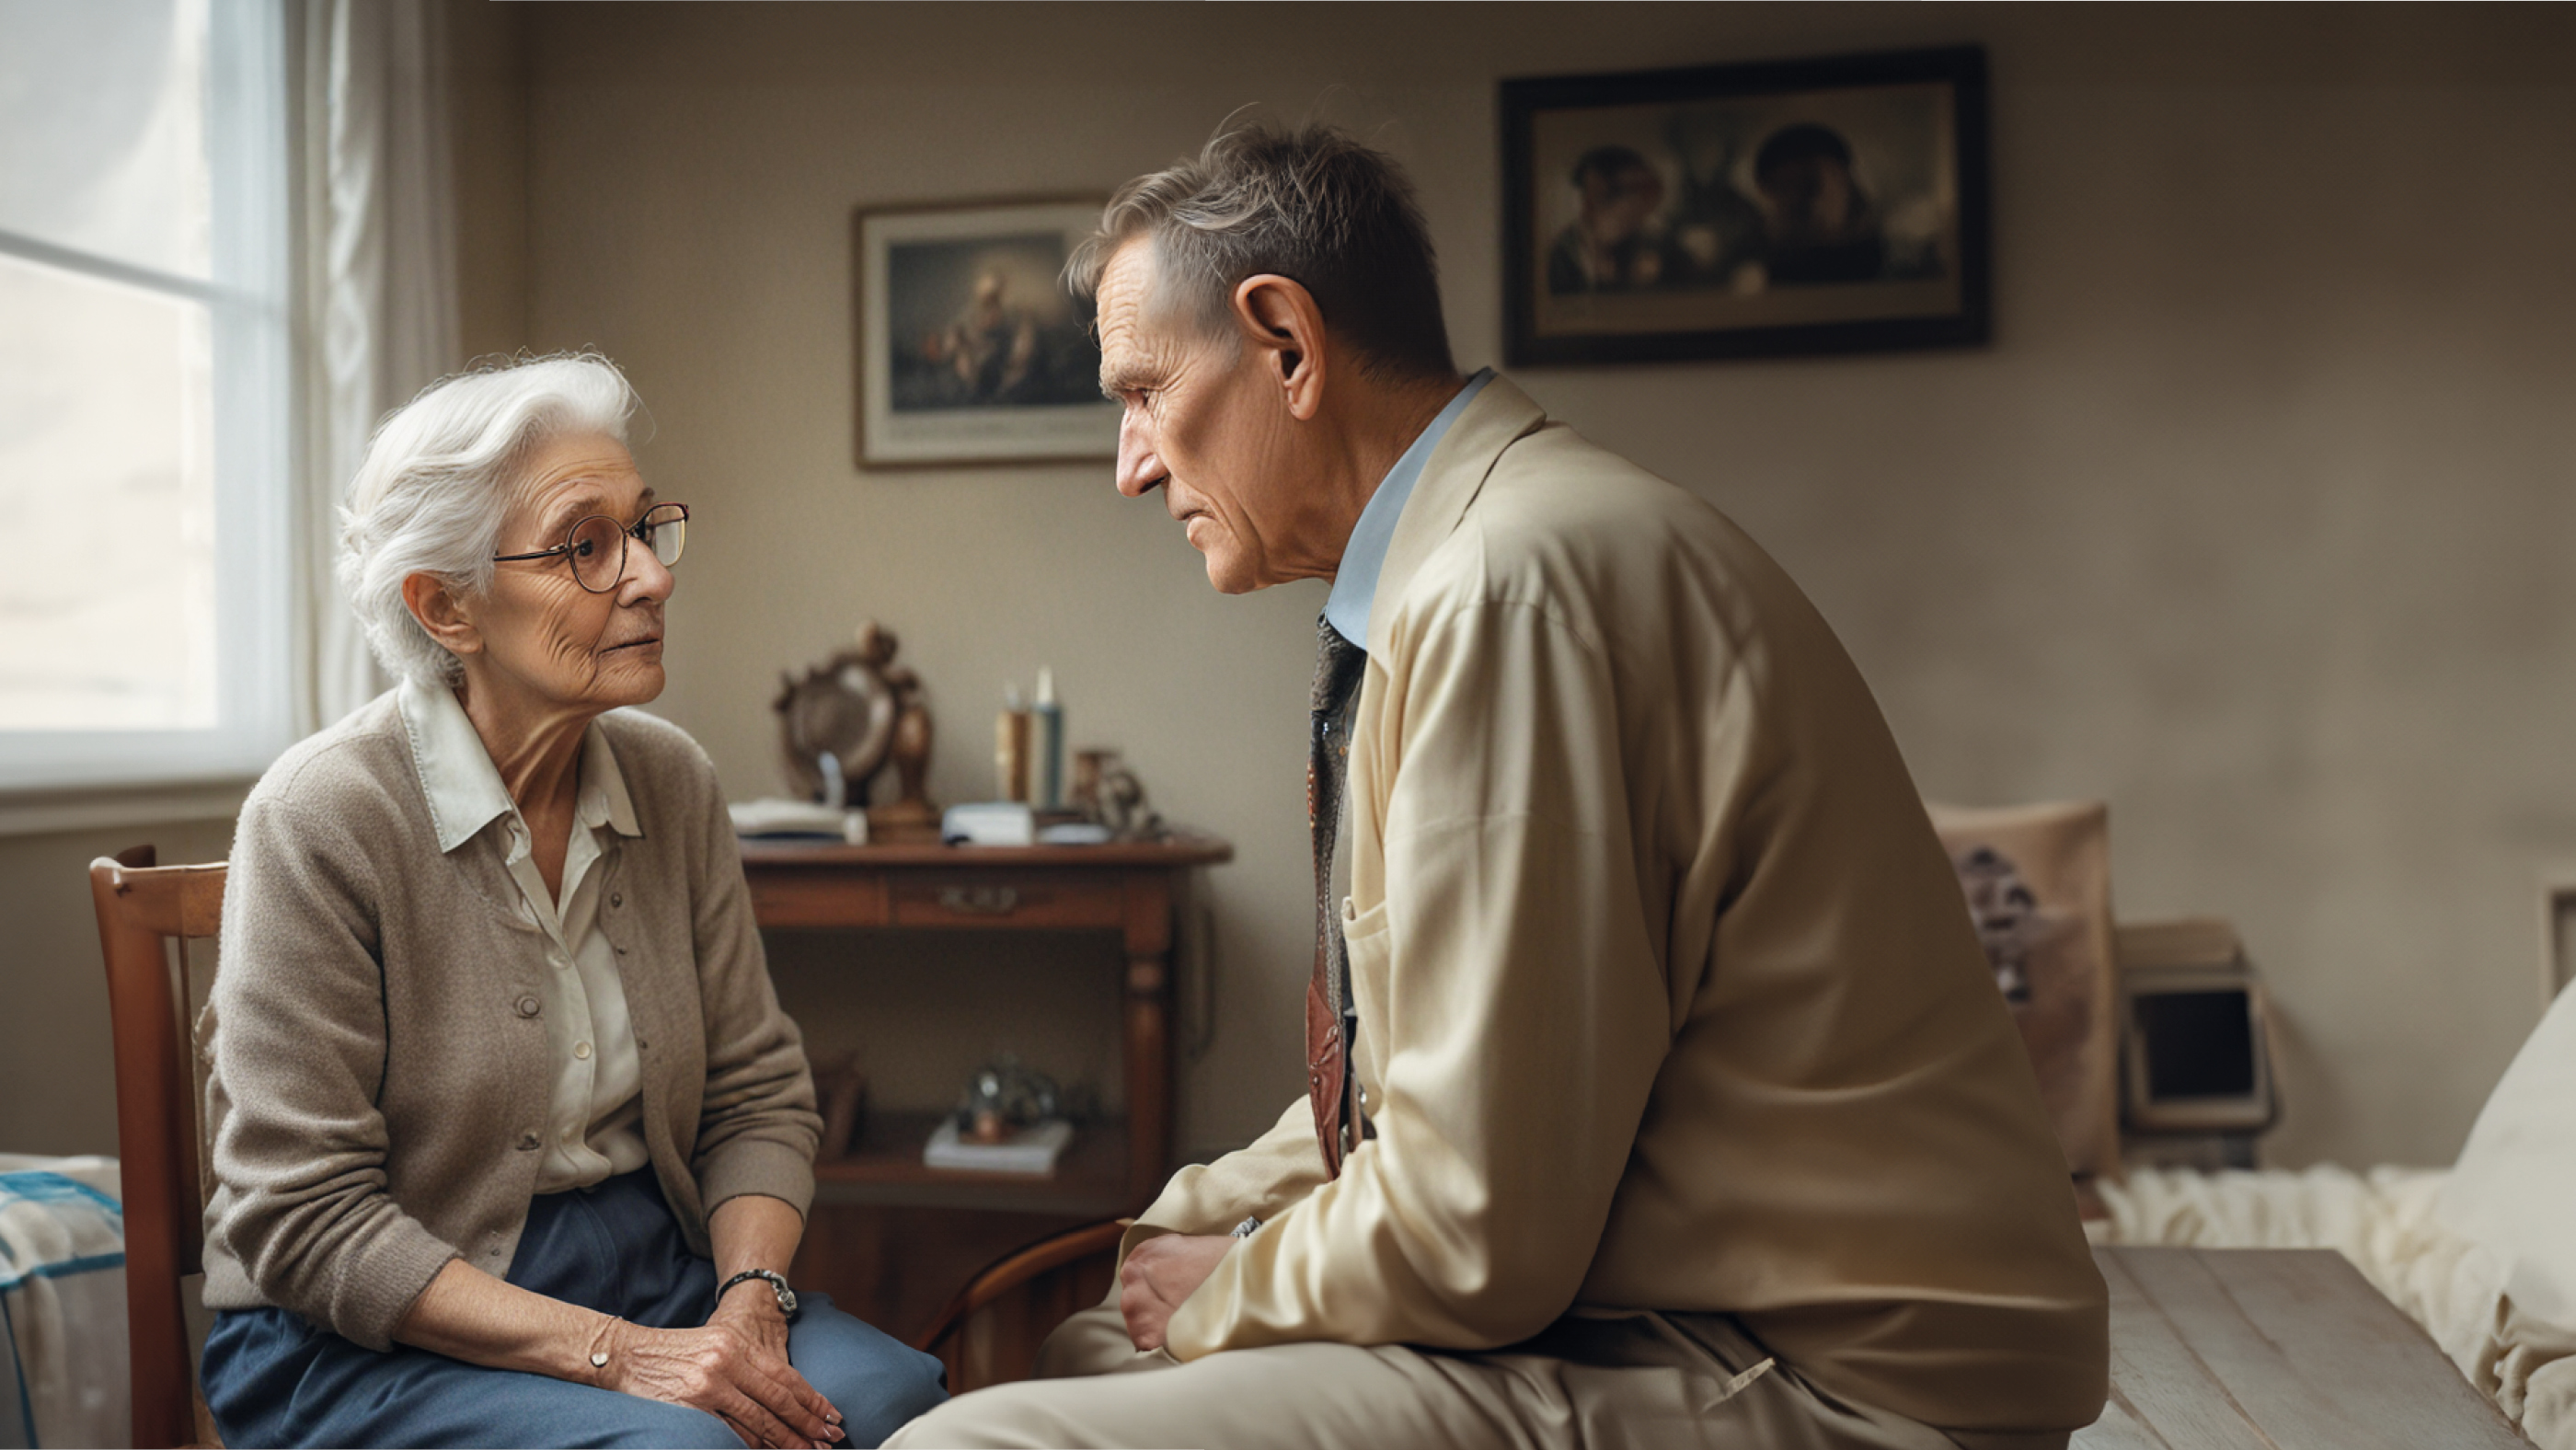 Un giovane uomo seduto su un letto parla con una donna anziana seduta su una sedia.